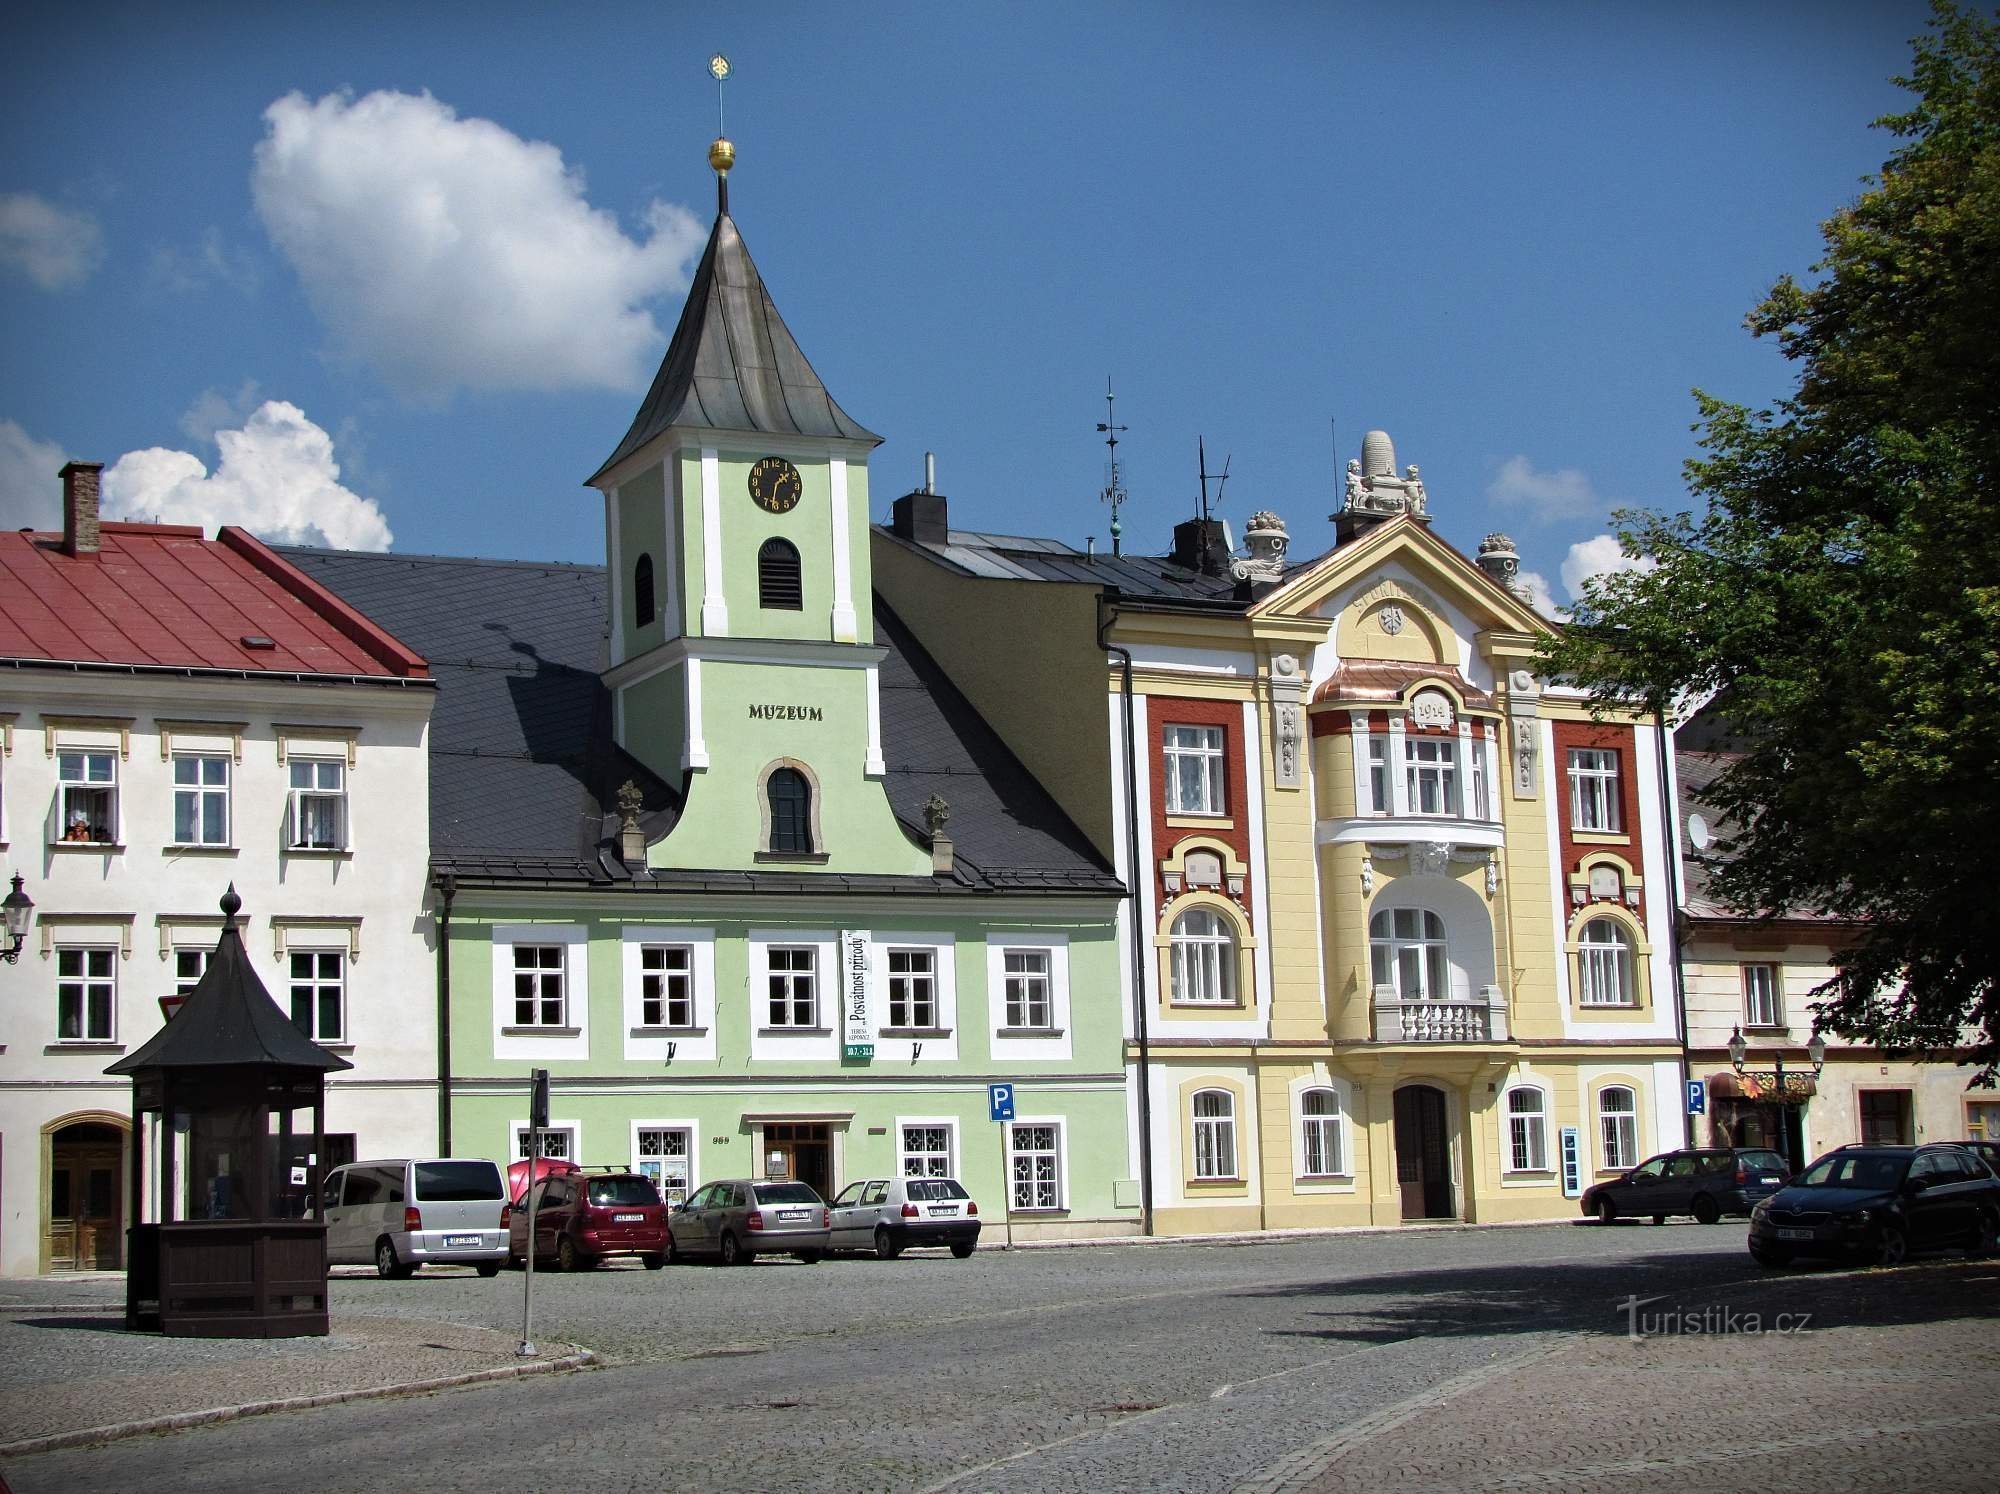 Králíky - de belangrijkste markt